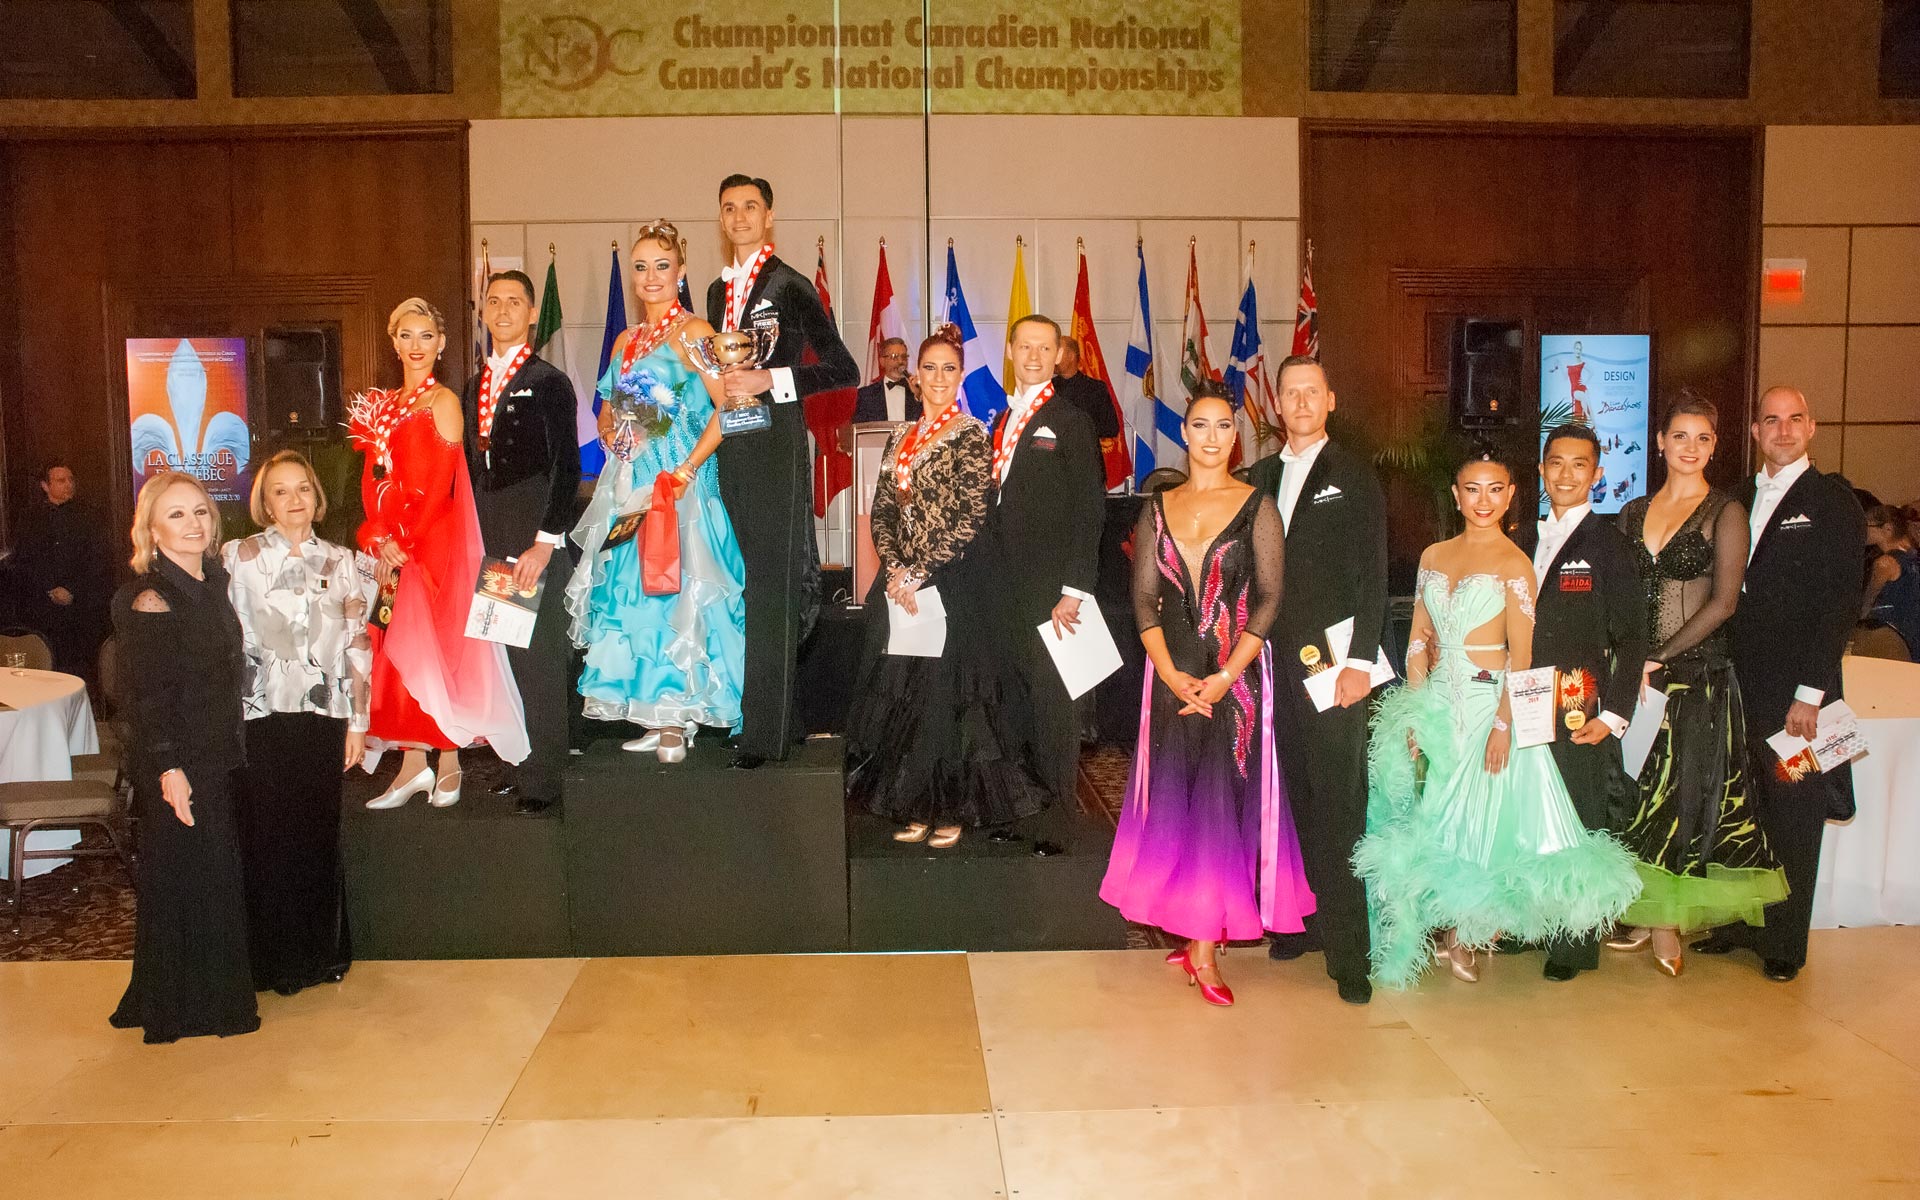 Canadian Professional Ballroom Championship awards 2019